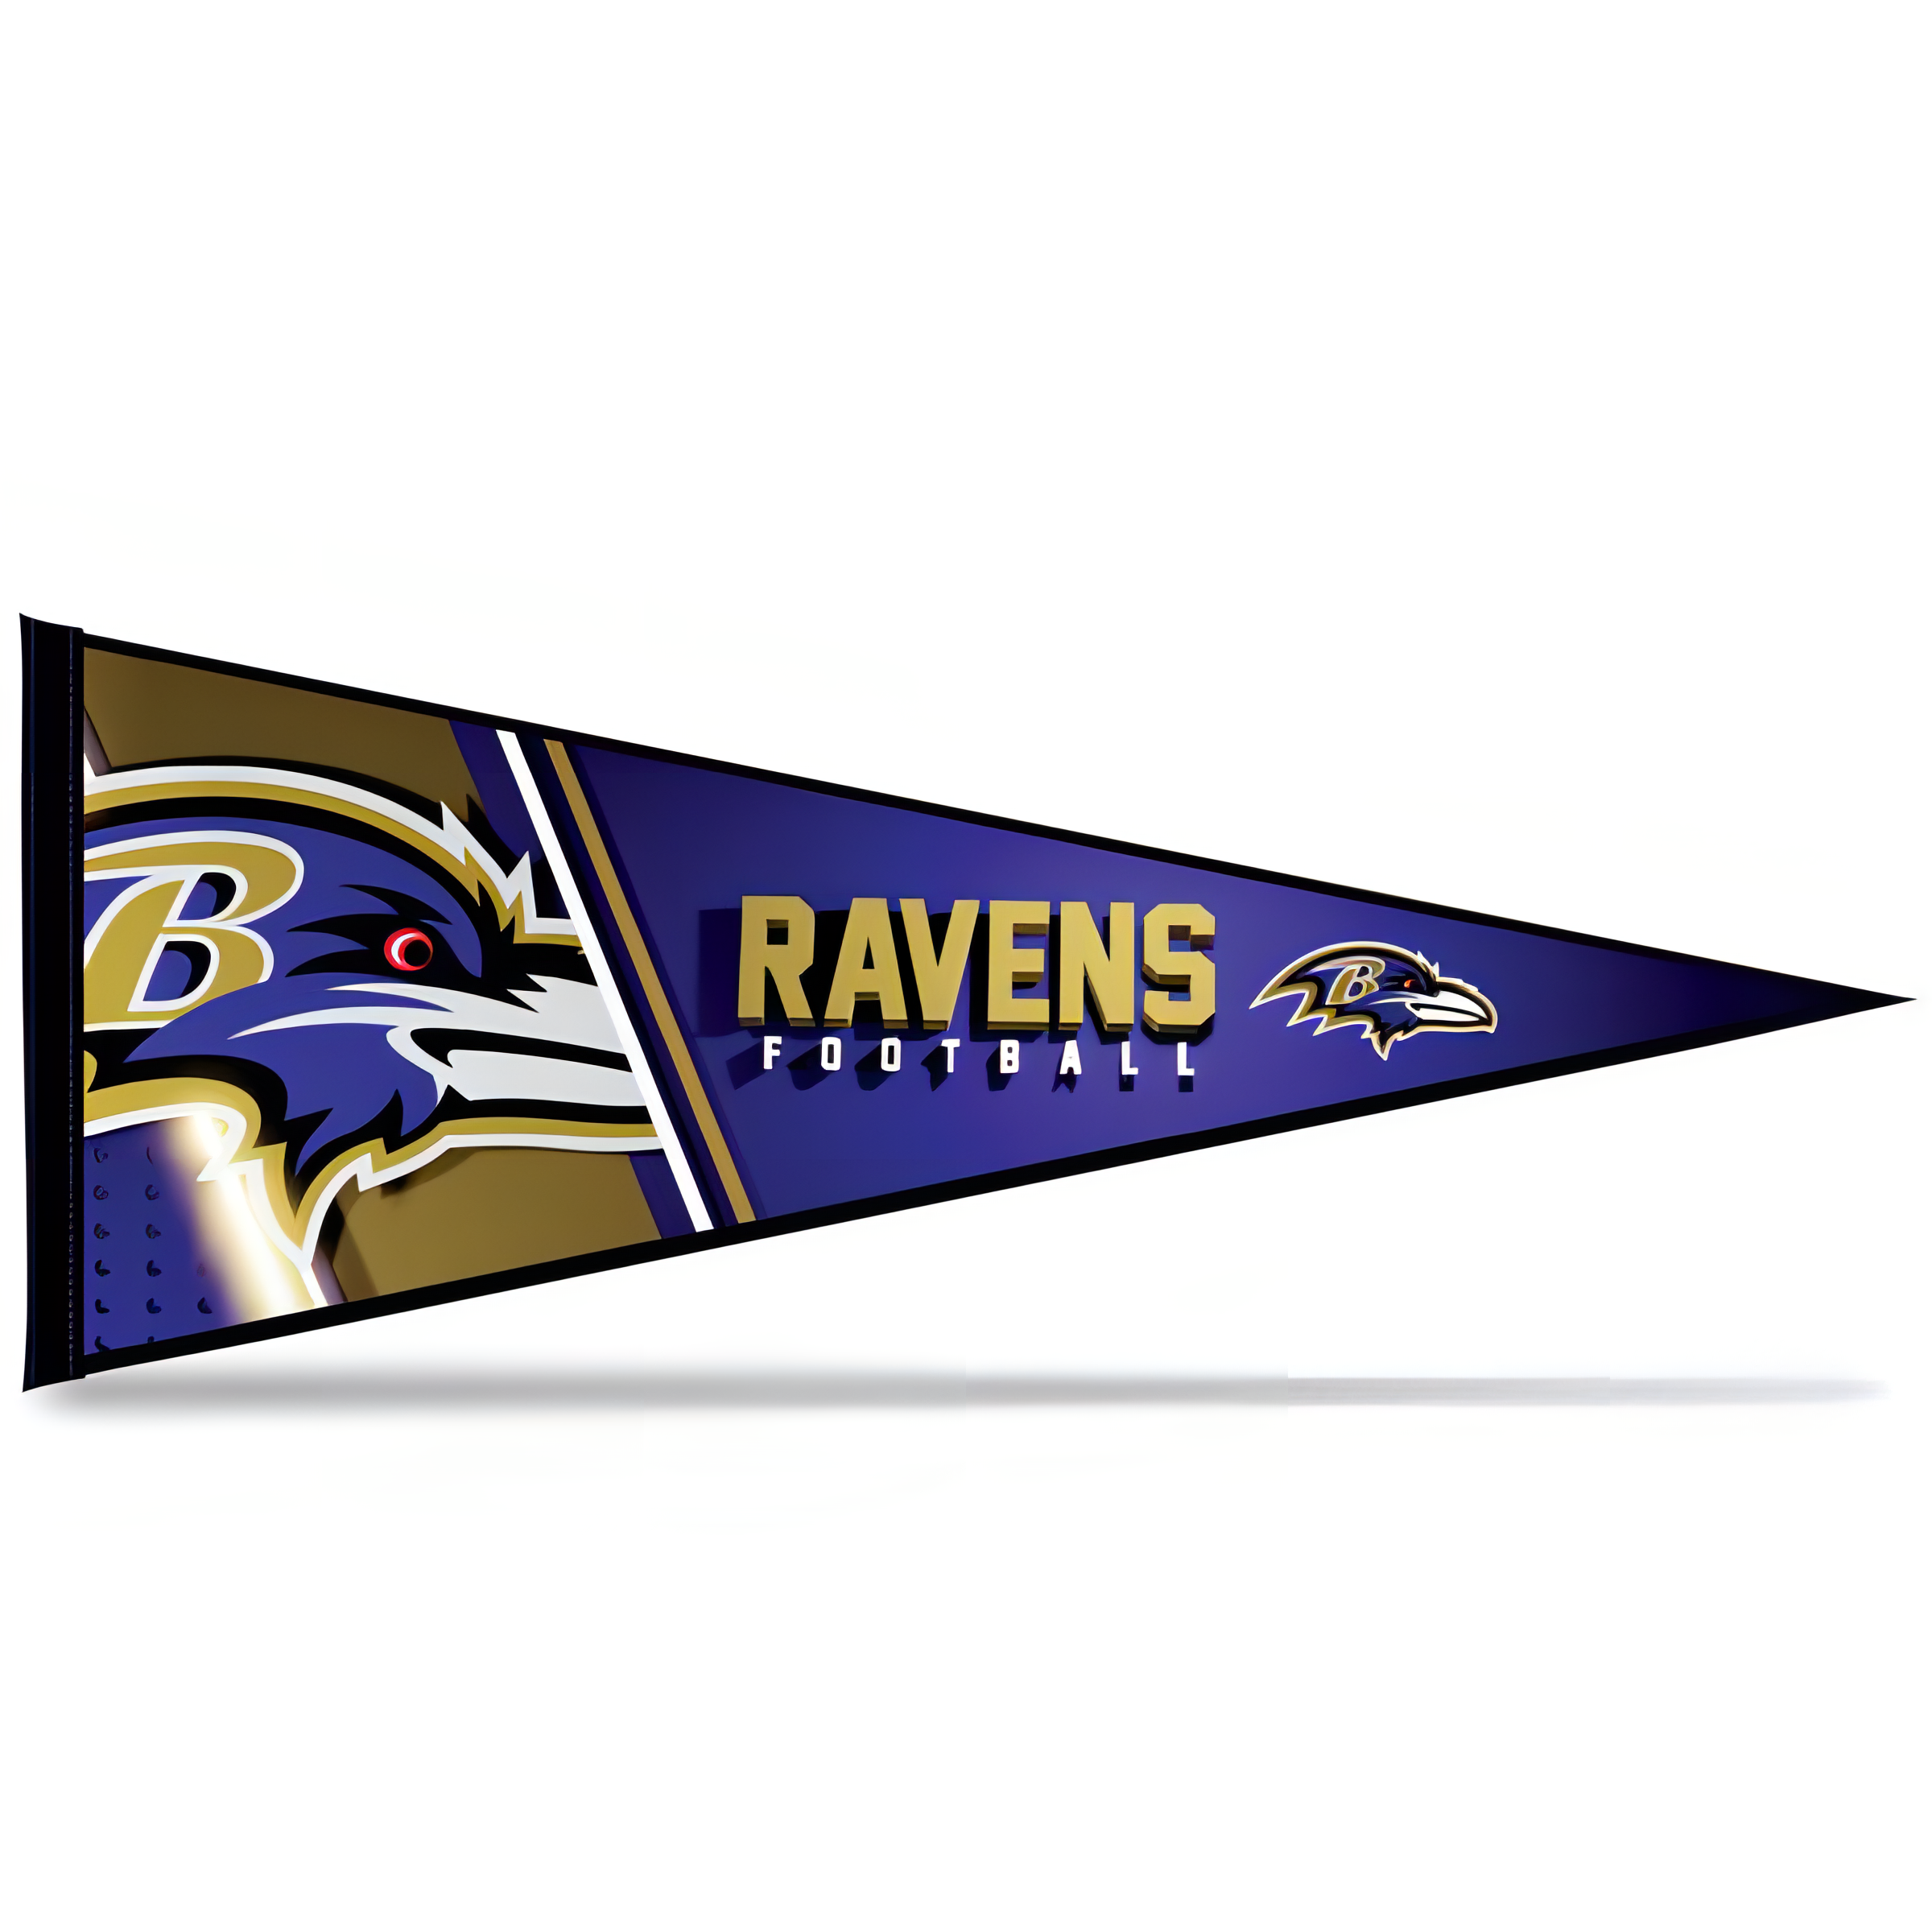 Banderín Decorativo Premium Pennant NFL Ravens